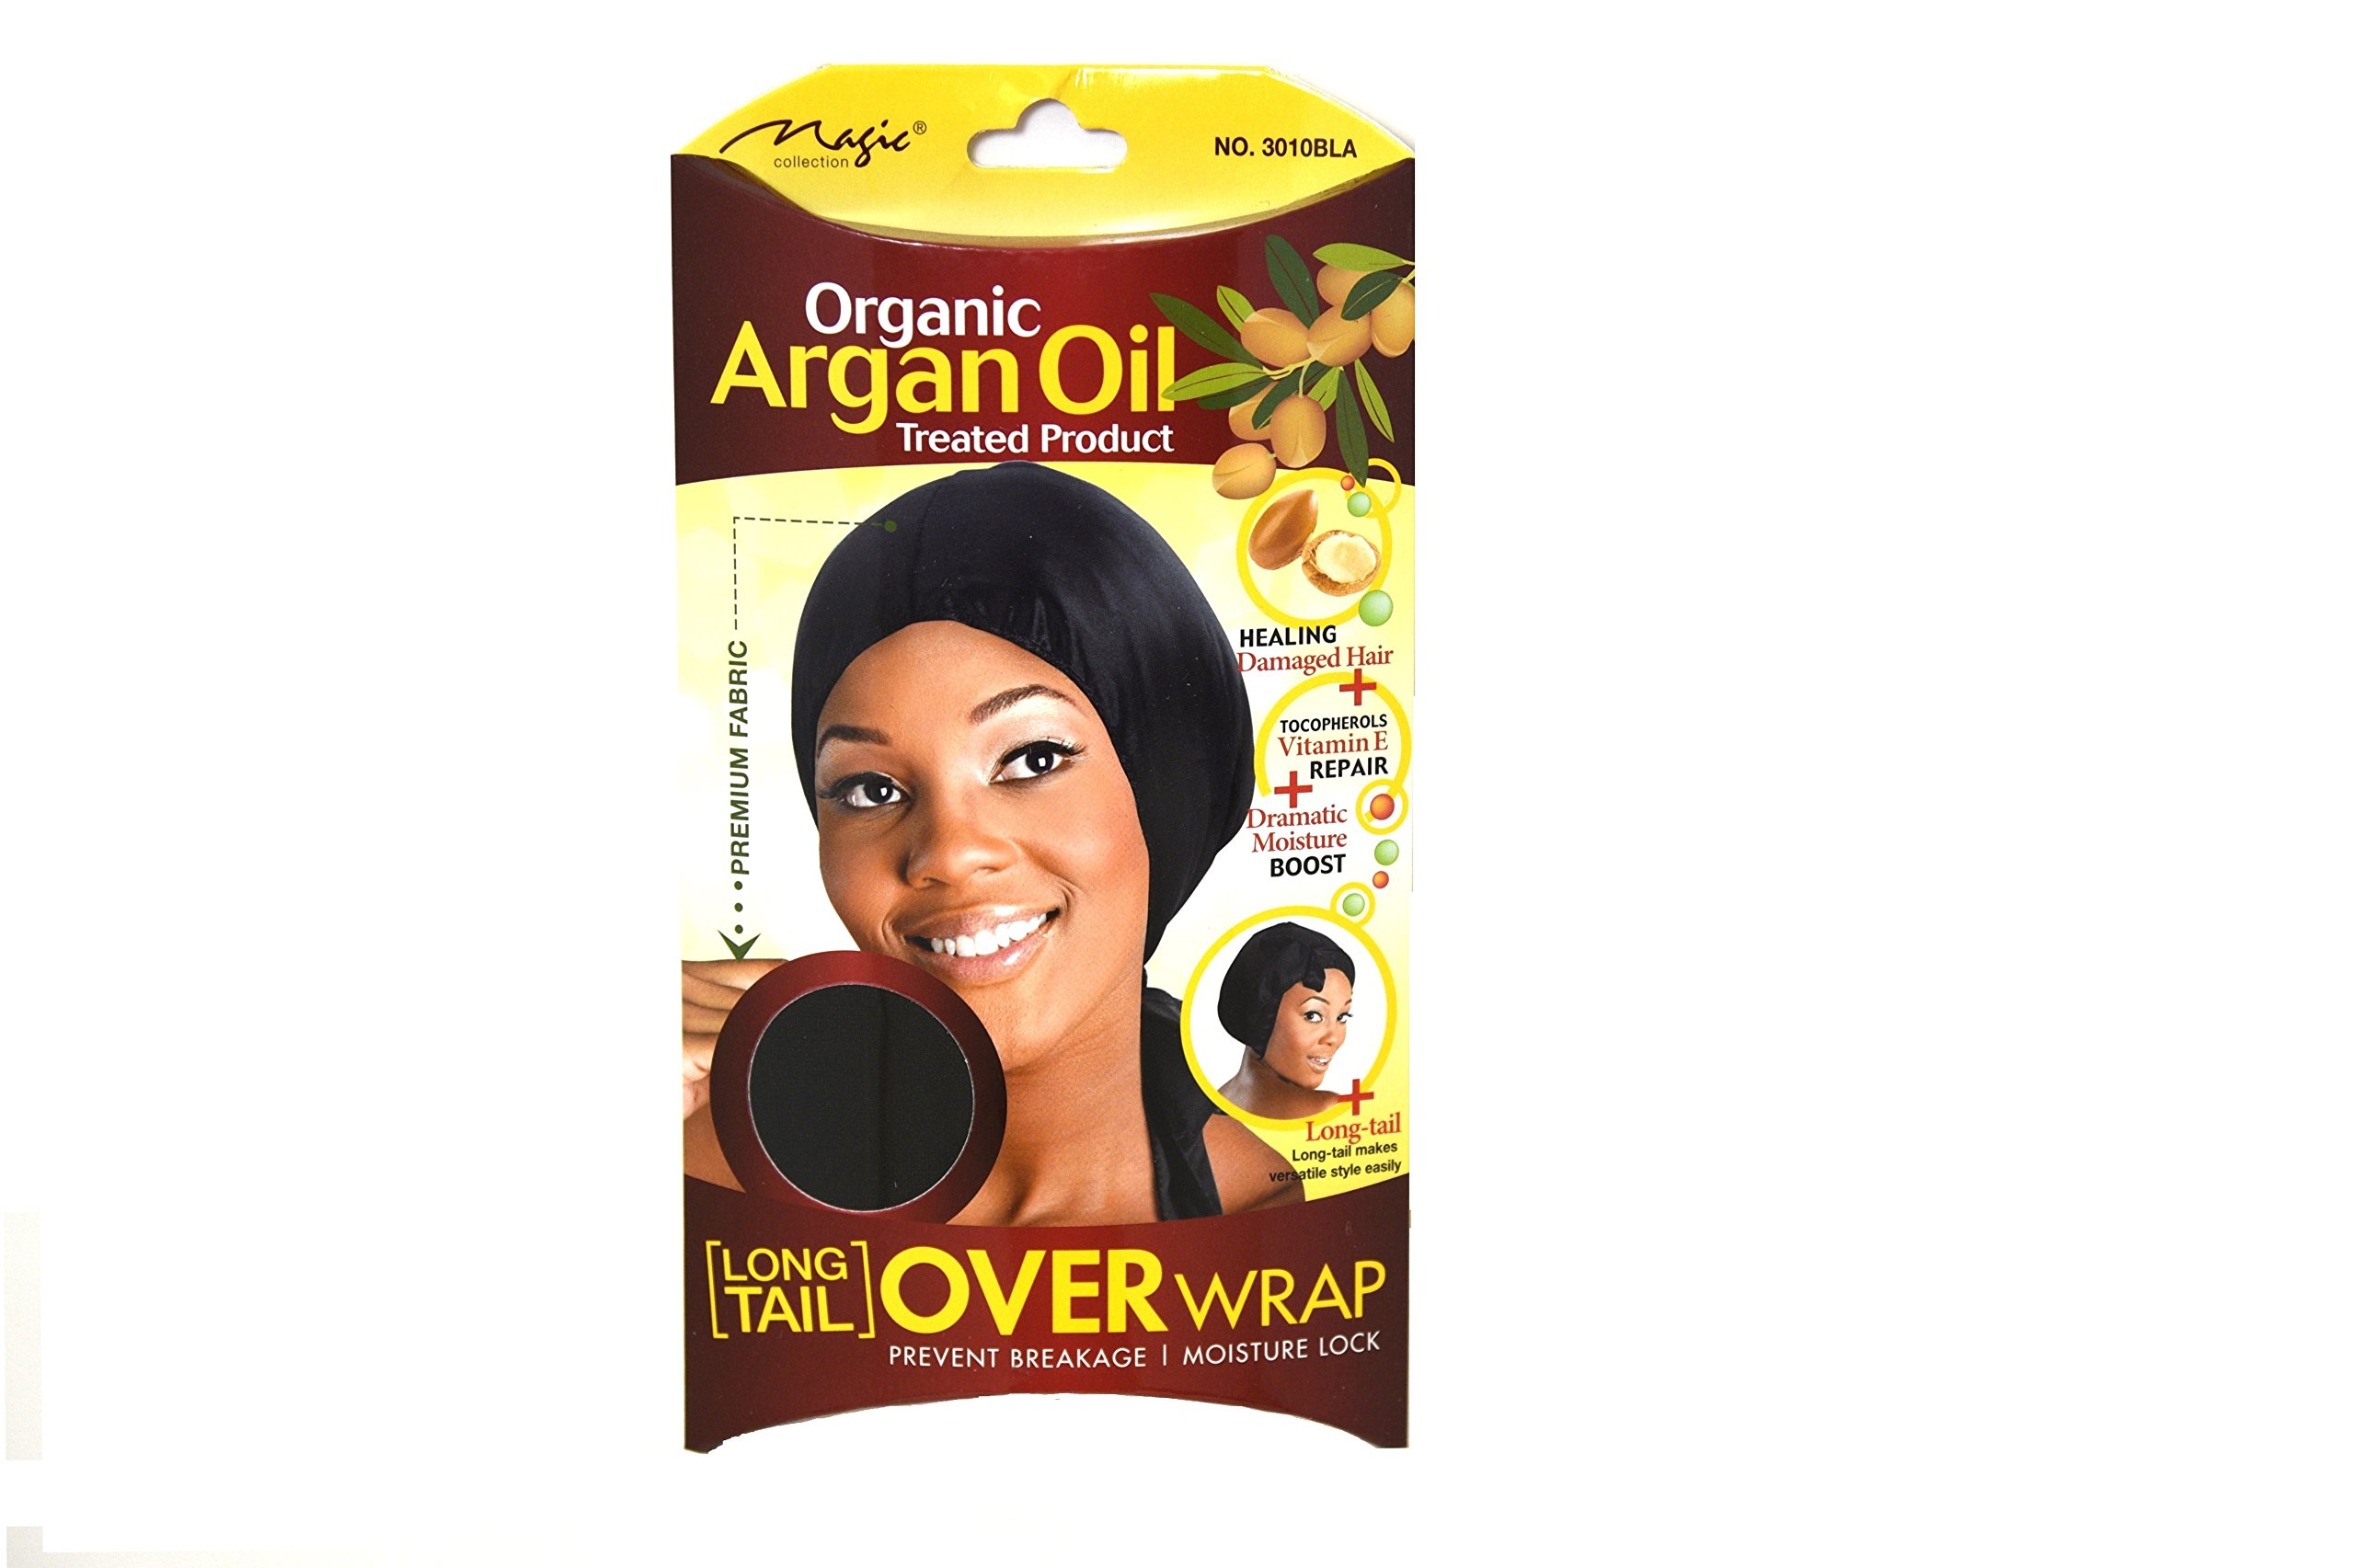 Magic Organic Argan Oil Treated Product (Long Tail Over Wrap)